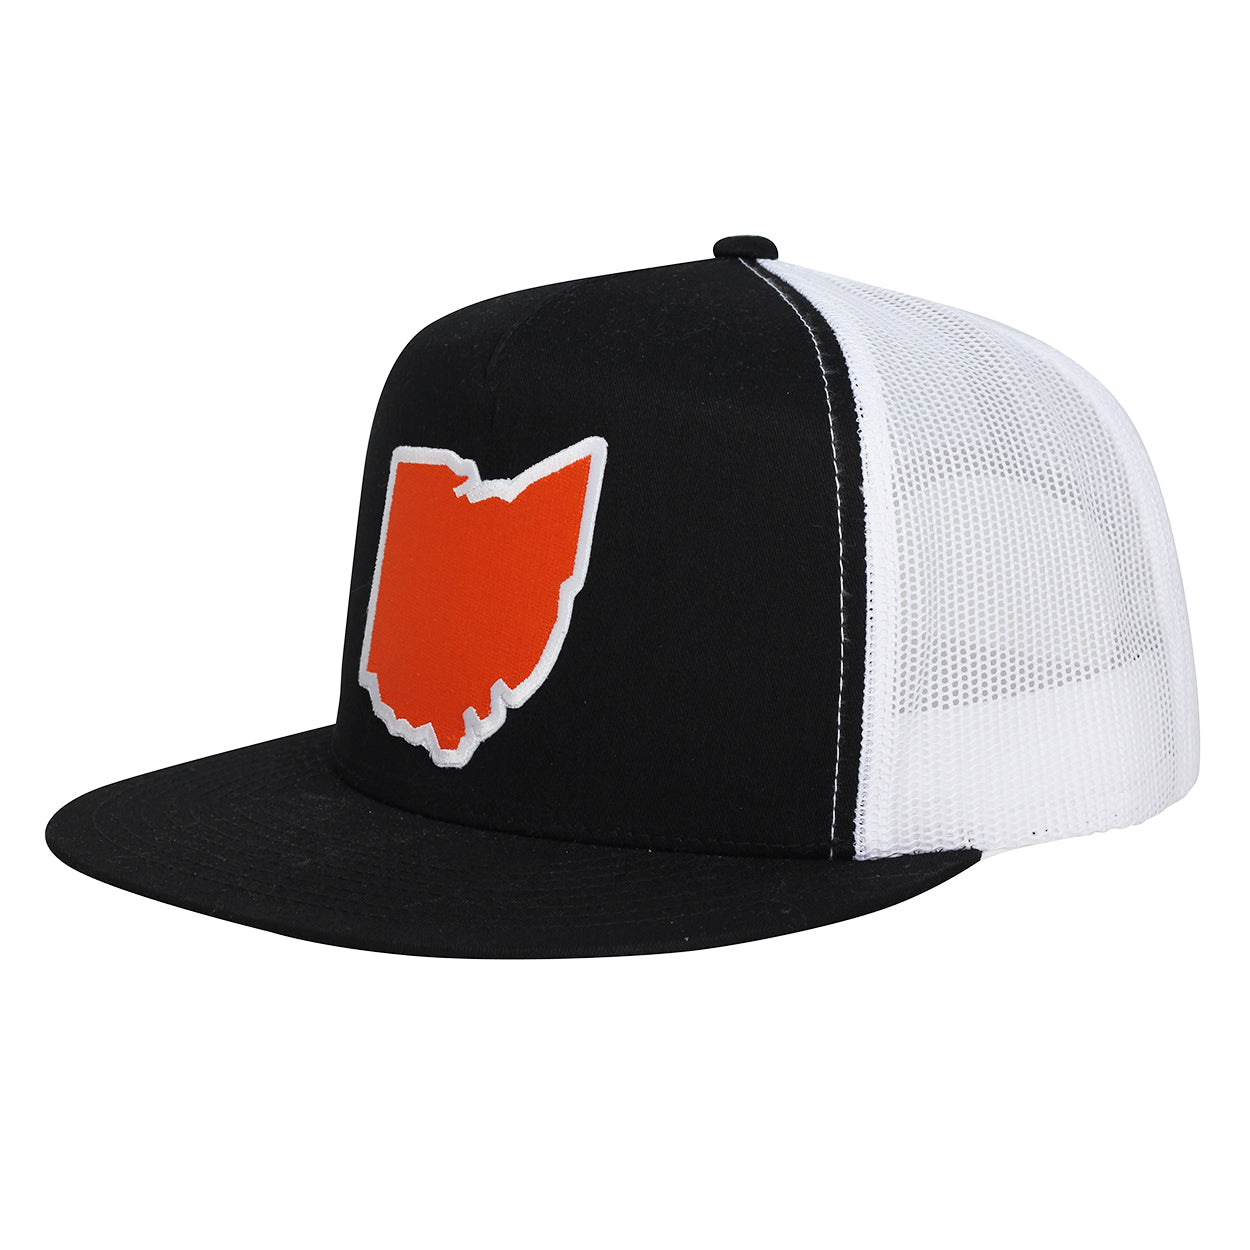 Ohio Orange Patch Snap back Trucker Hat